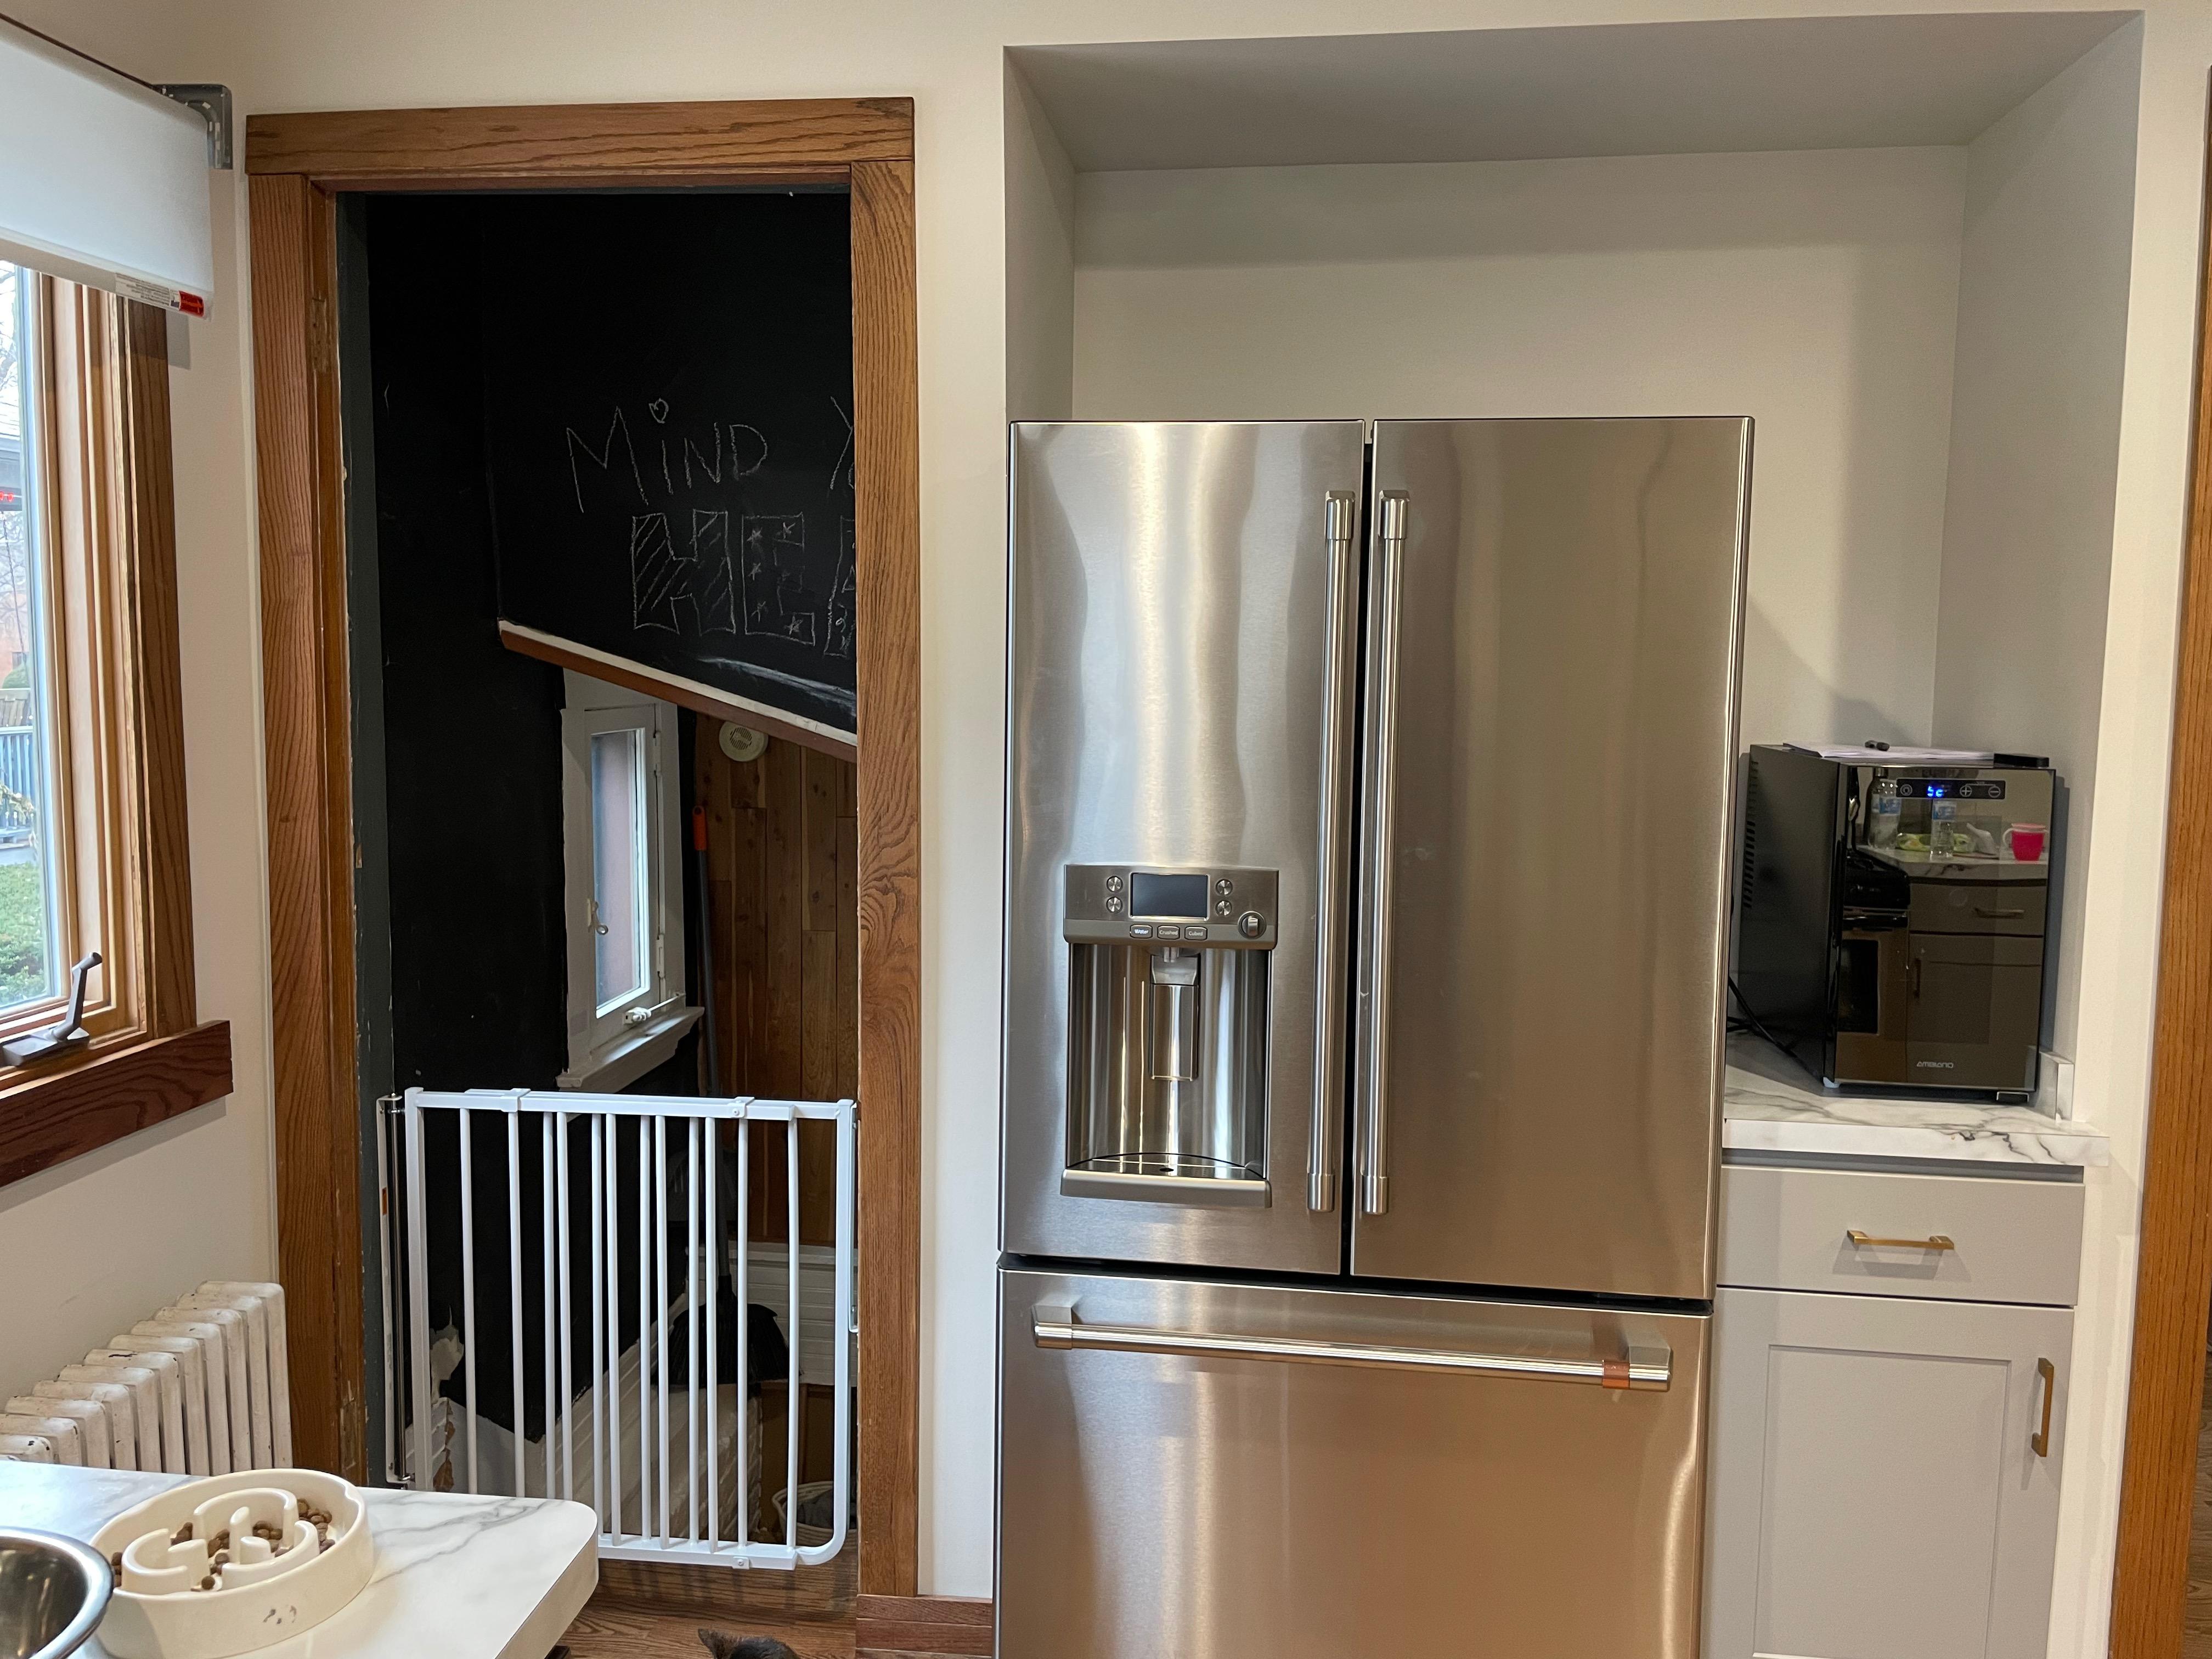 Apartment Kitchen Ideas - 9 Temporary Updates - Bob Vila